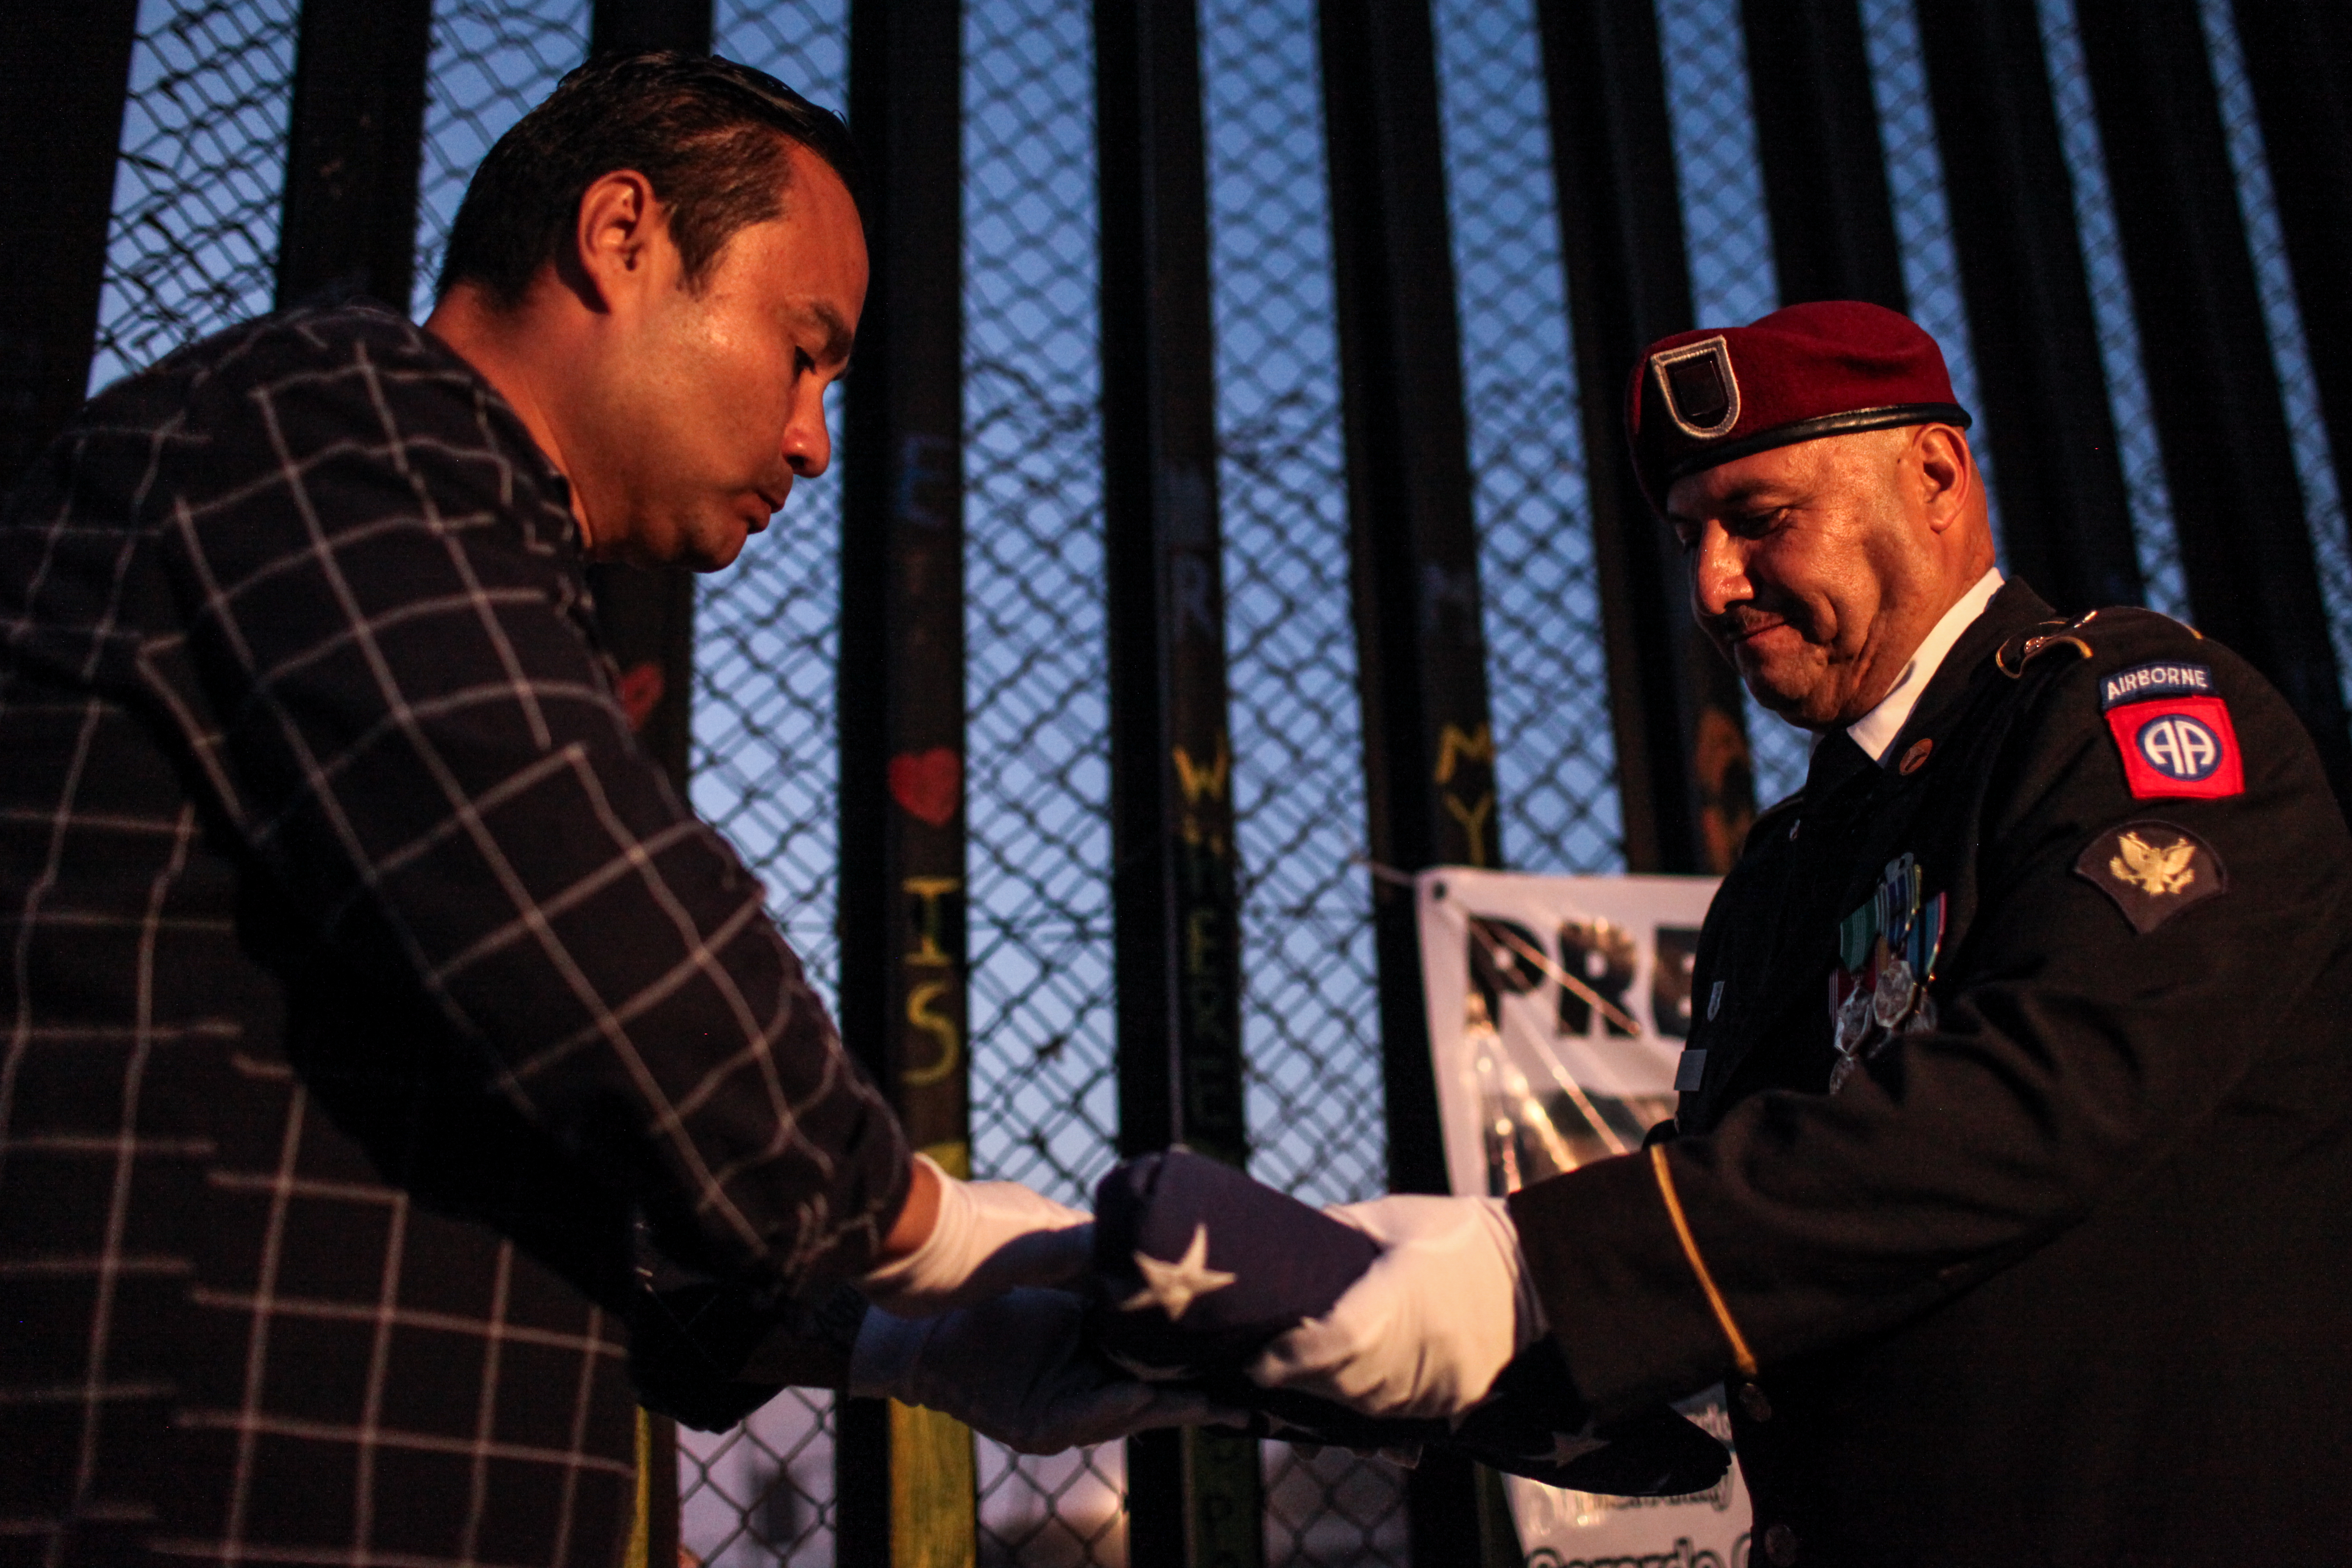 Deported Veterans celebrate 4th of July in Tijuana